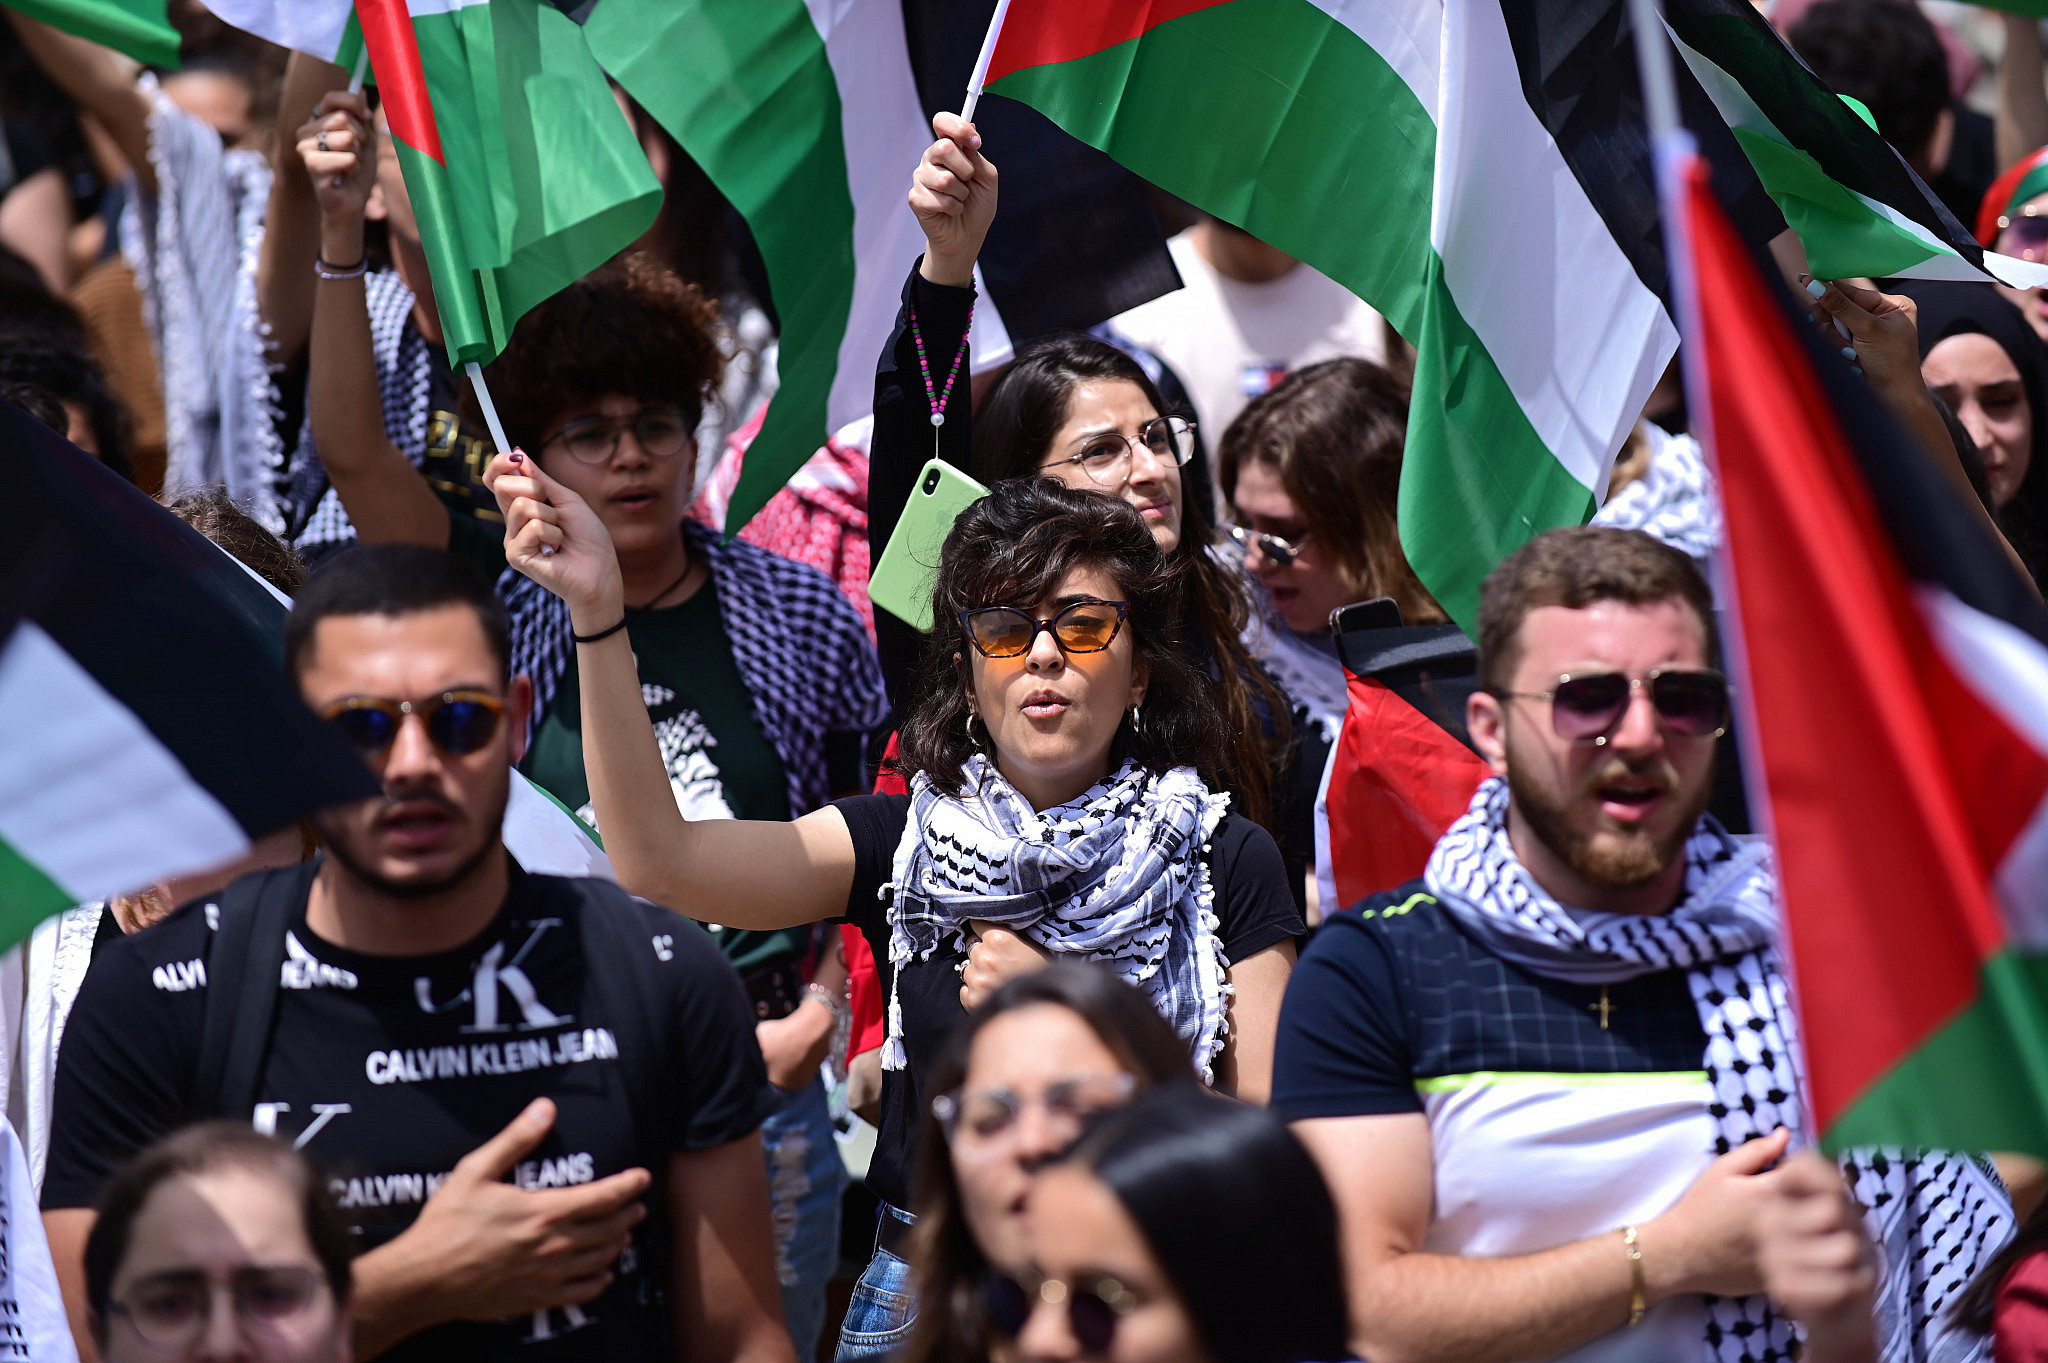 Arab citizens of Israel and Israeli left-wing activist students attend a rally marking the Nakba anniversary at Tel Aviv University, May 15, 2022. (Tomer Neuberg/Flash90)